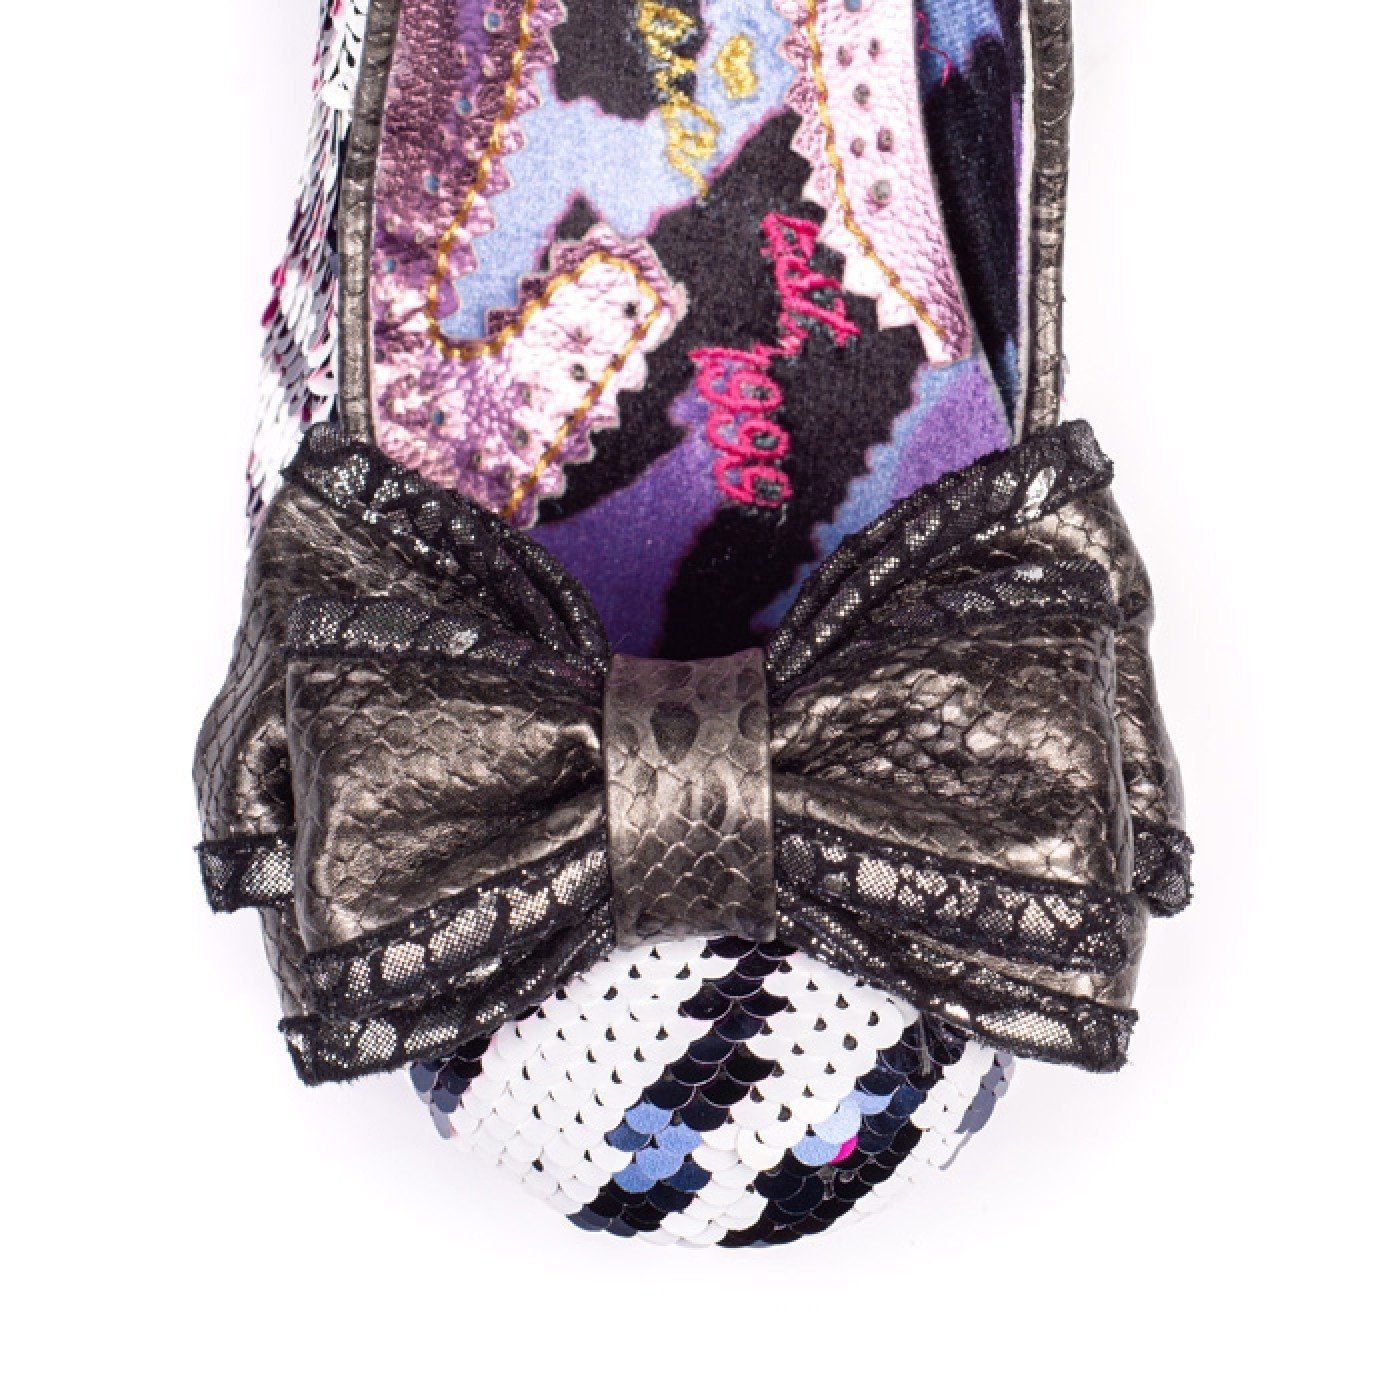 Lady Ban Joe Pink/White Mid Heel - Rockamilly-Shoes-Vintage